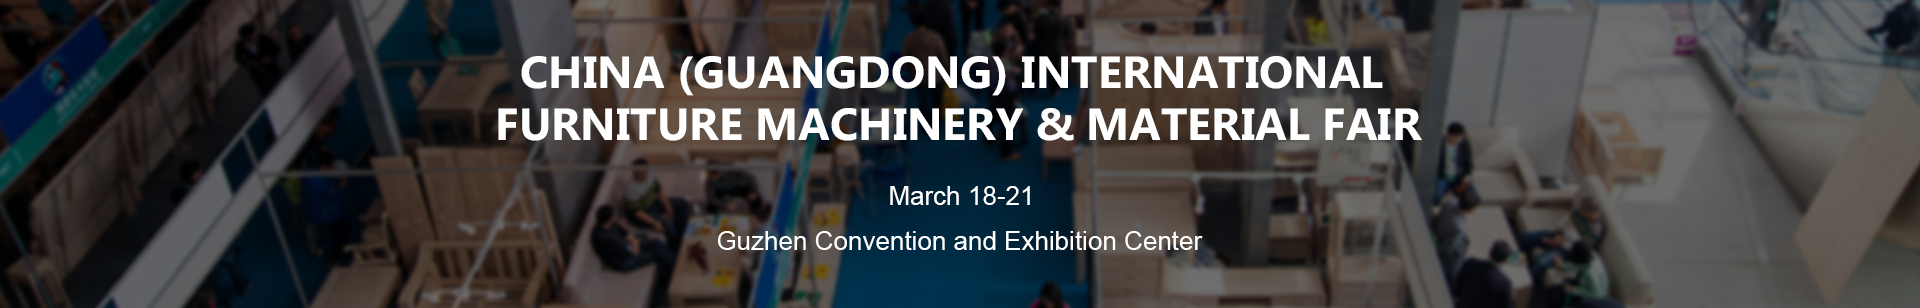 China International Furniture Machinery & Material Fair